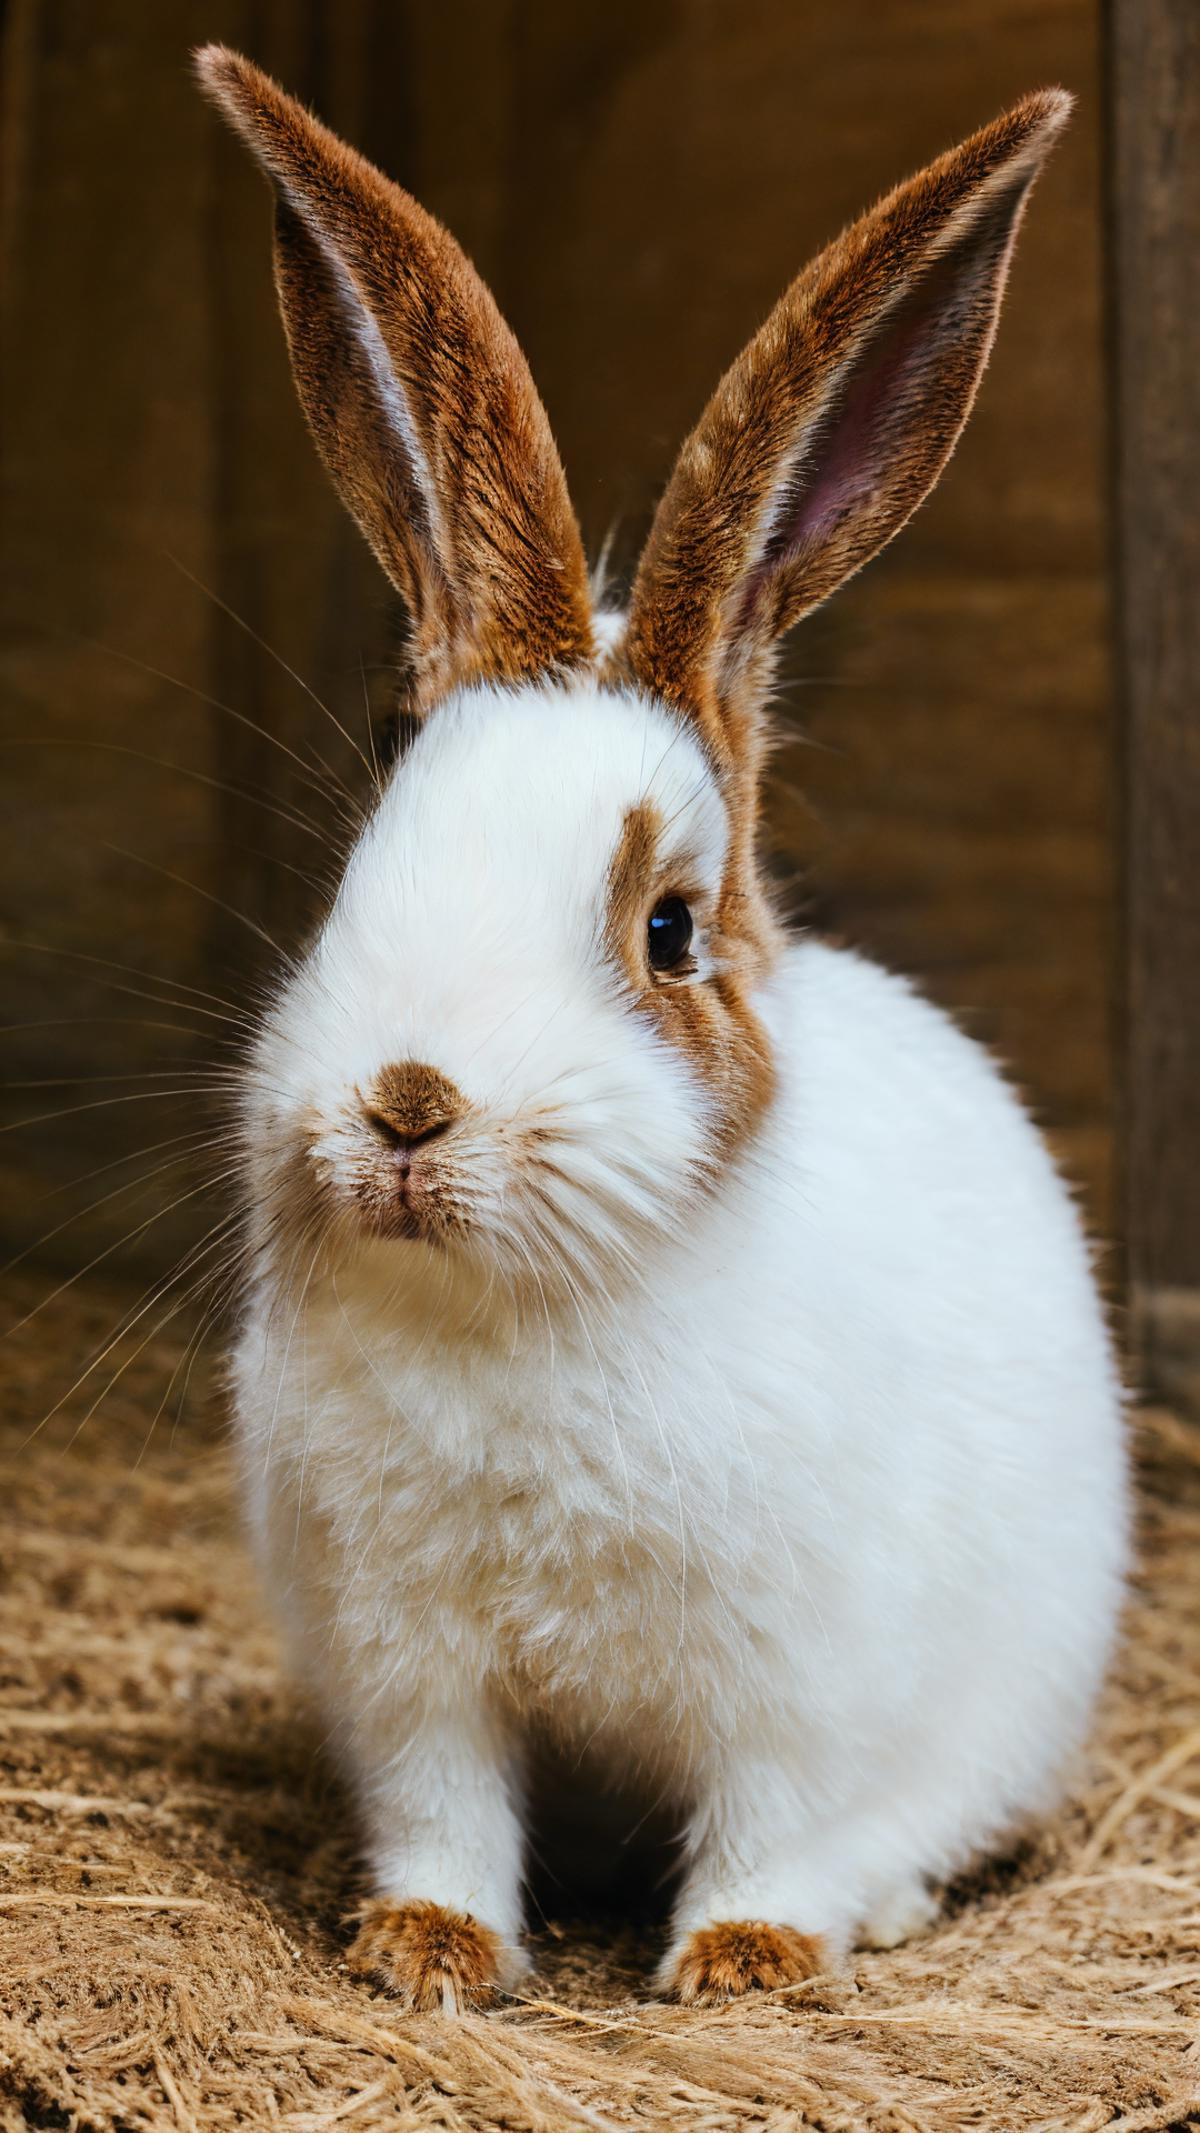 Tutu's favorite (cute bunny)\图图的心头好（可爱小兔） image by tututututuz